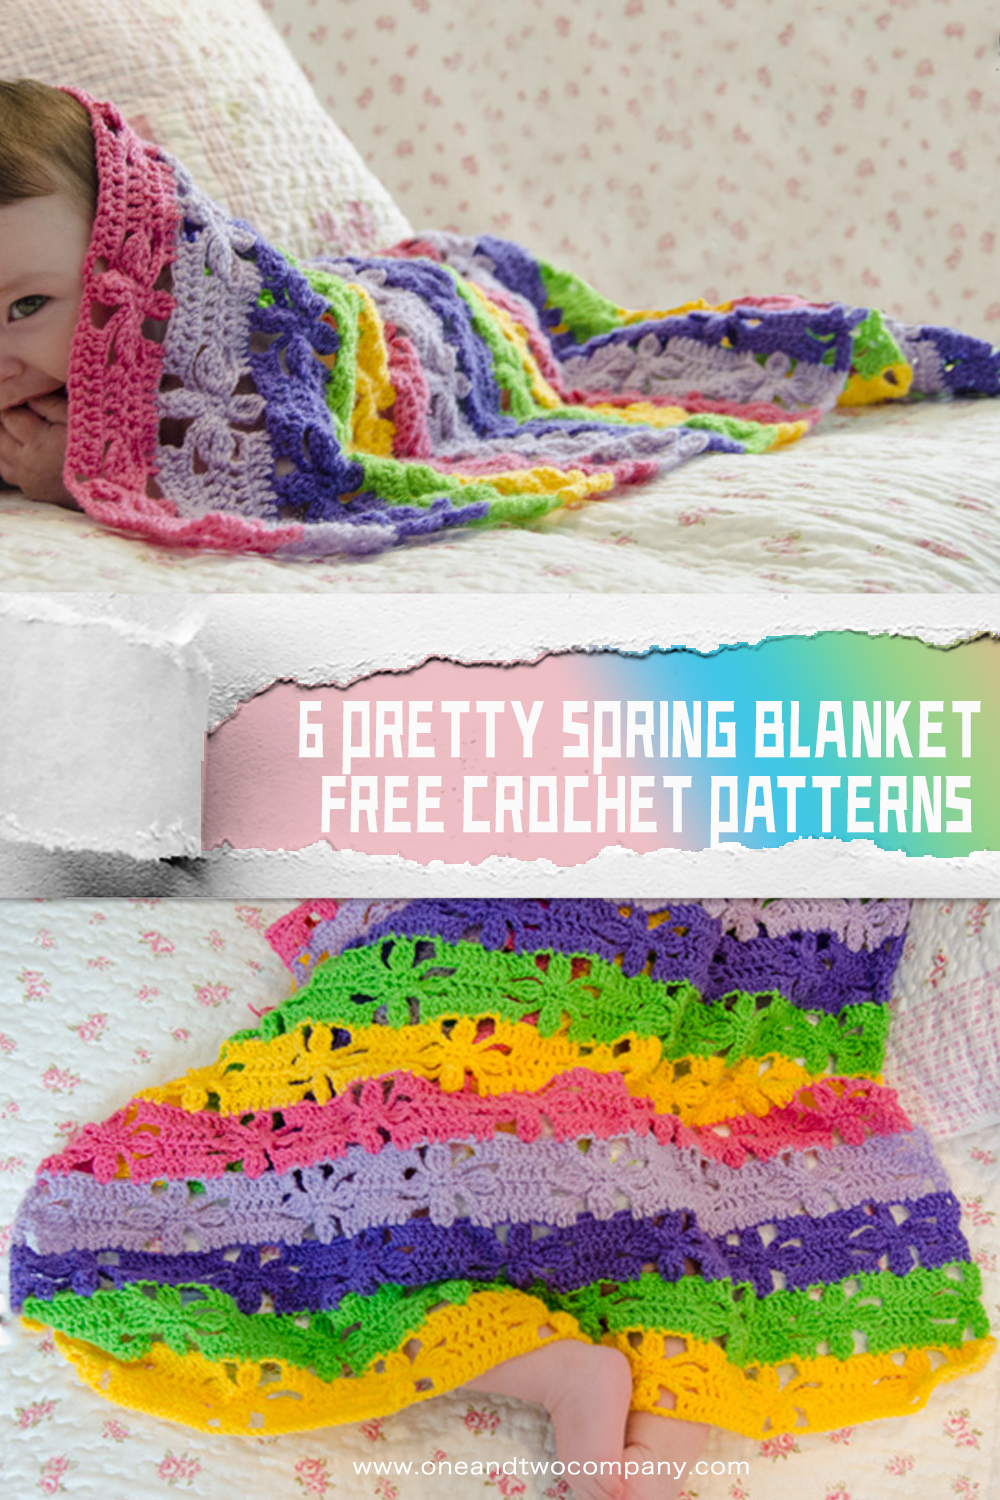 6 Pretty Spring Blanket FREE Crochet Patterns